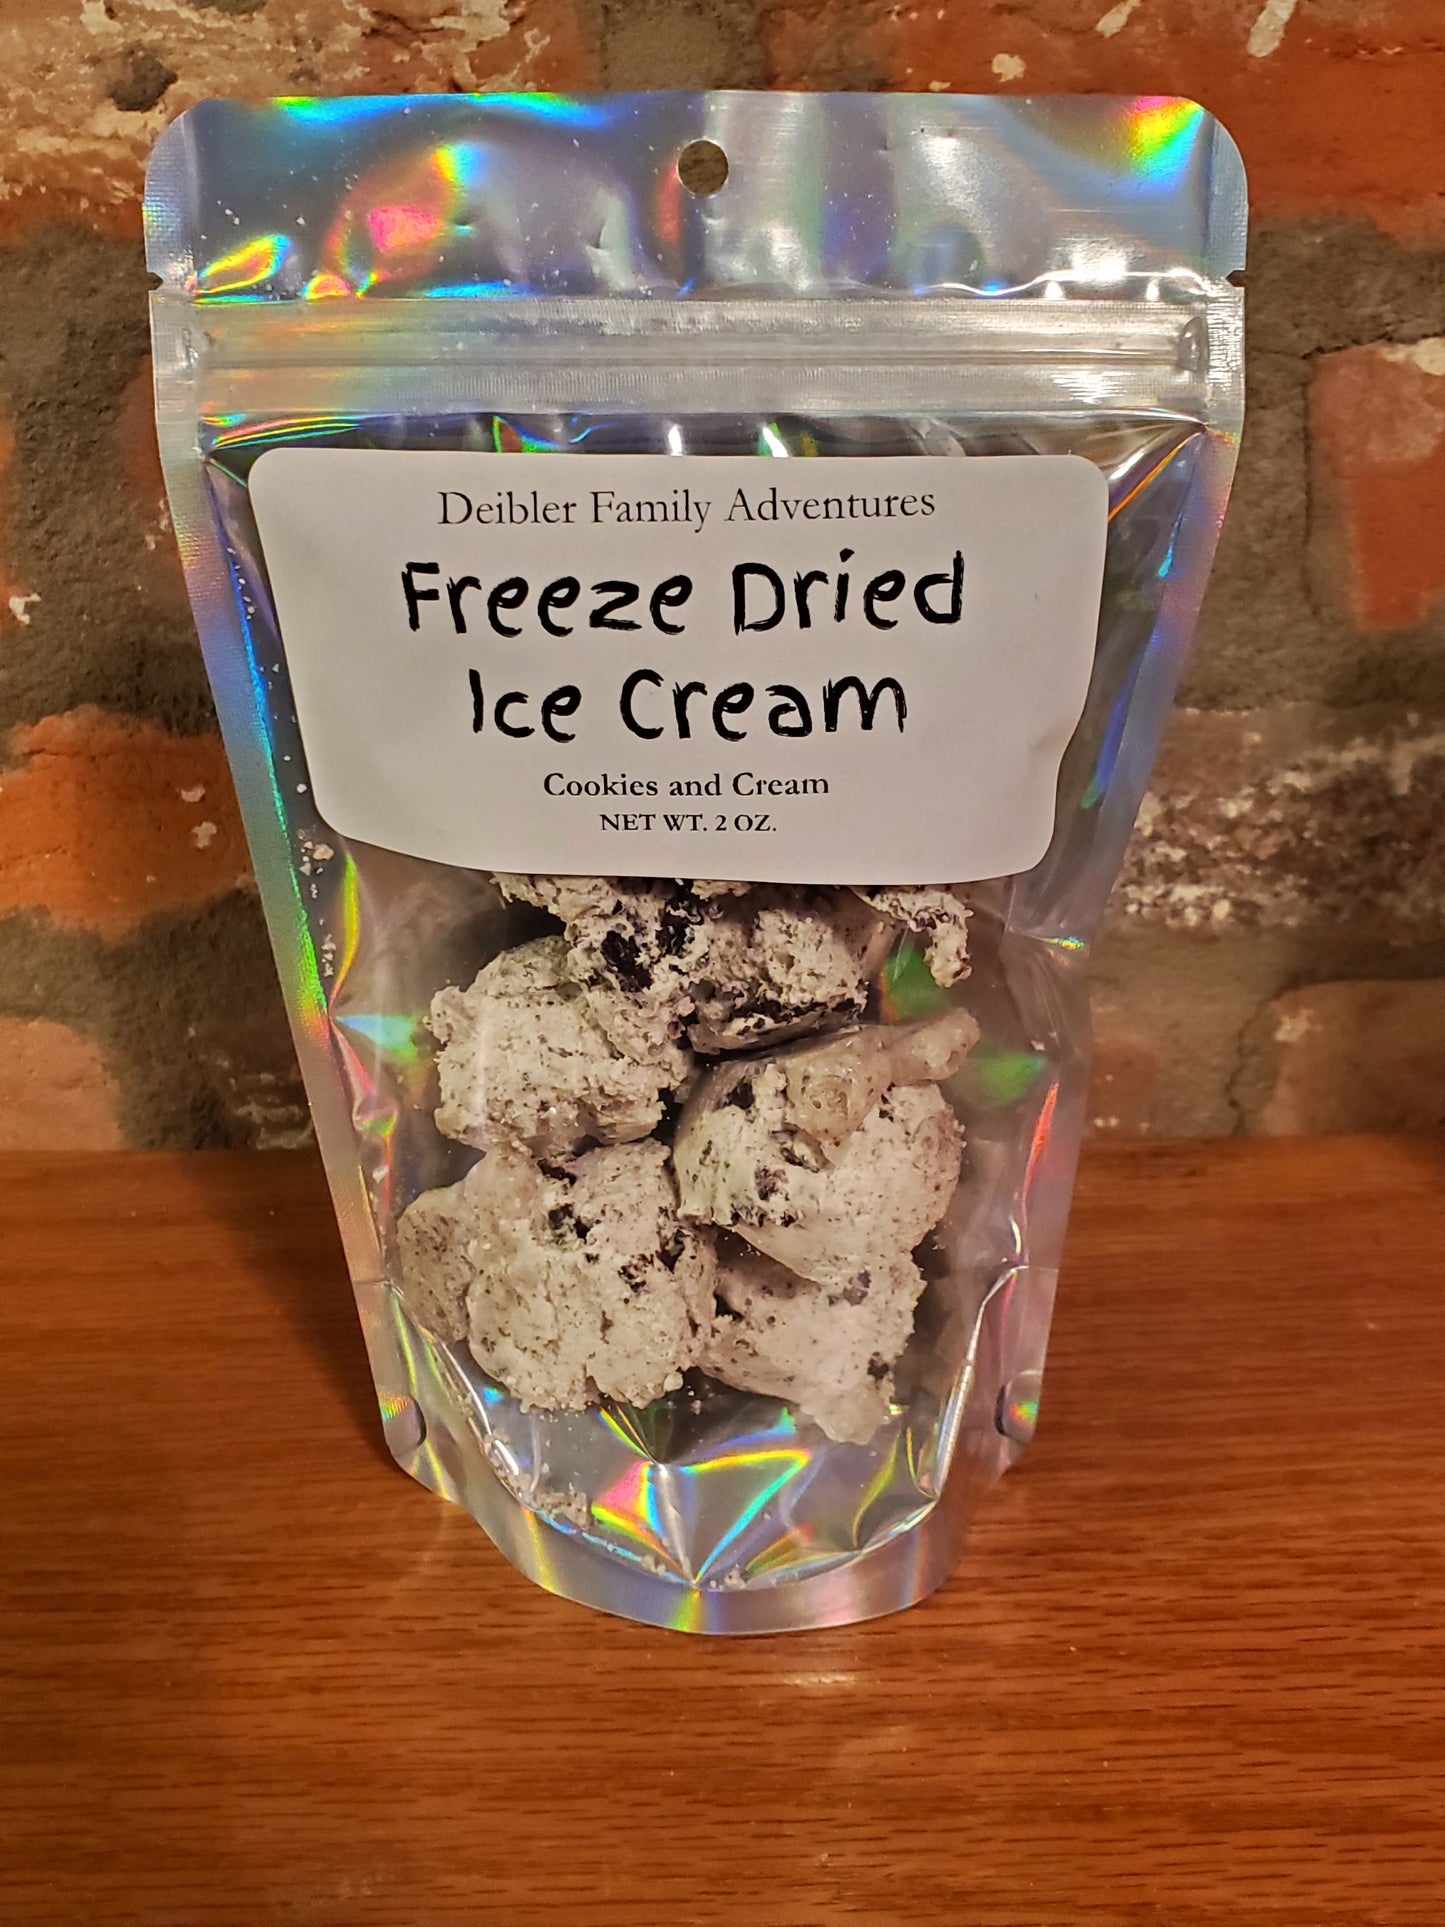 Freeze dried cookie dough ice cream